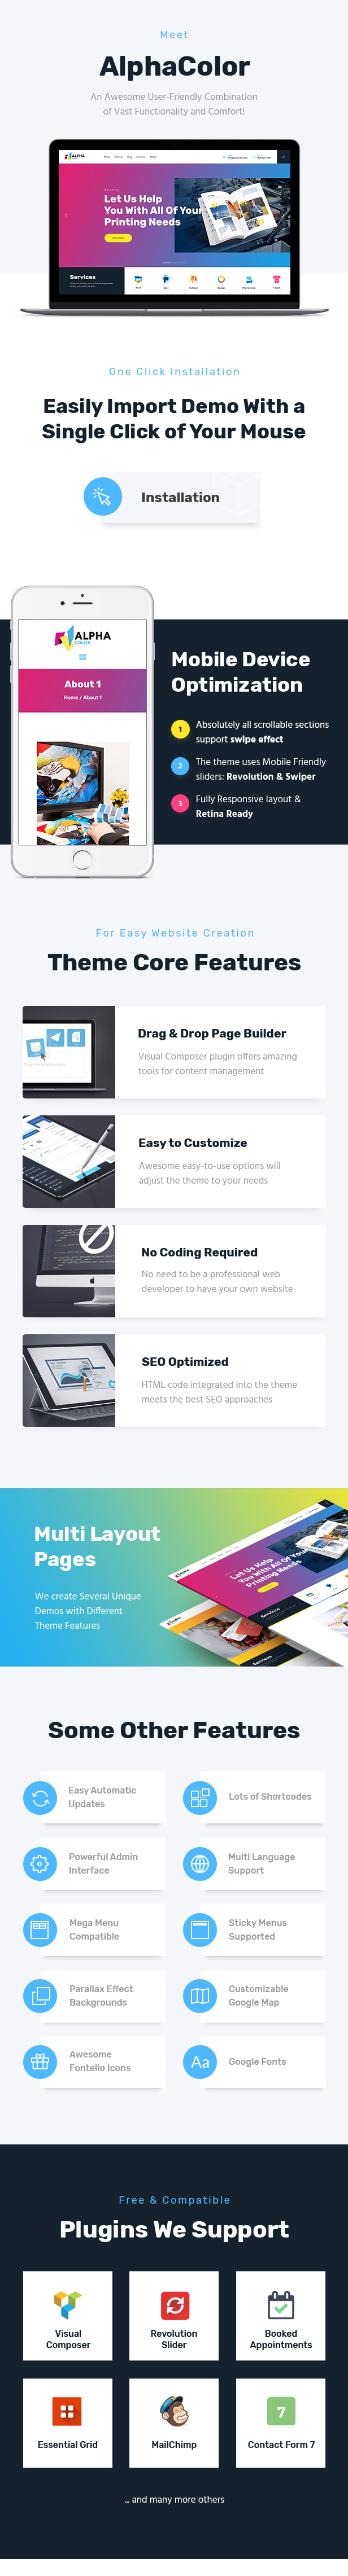 AlphaColor | Type Design & Printing Services WordPress Theme - 1